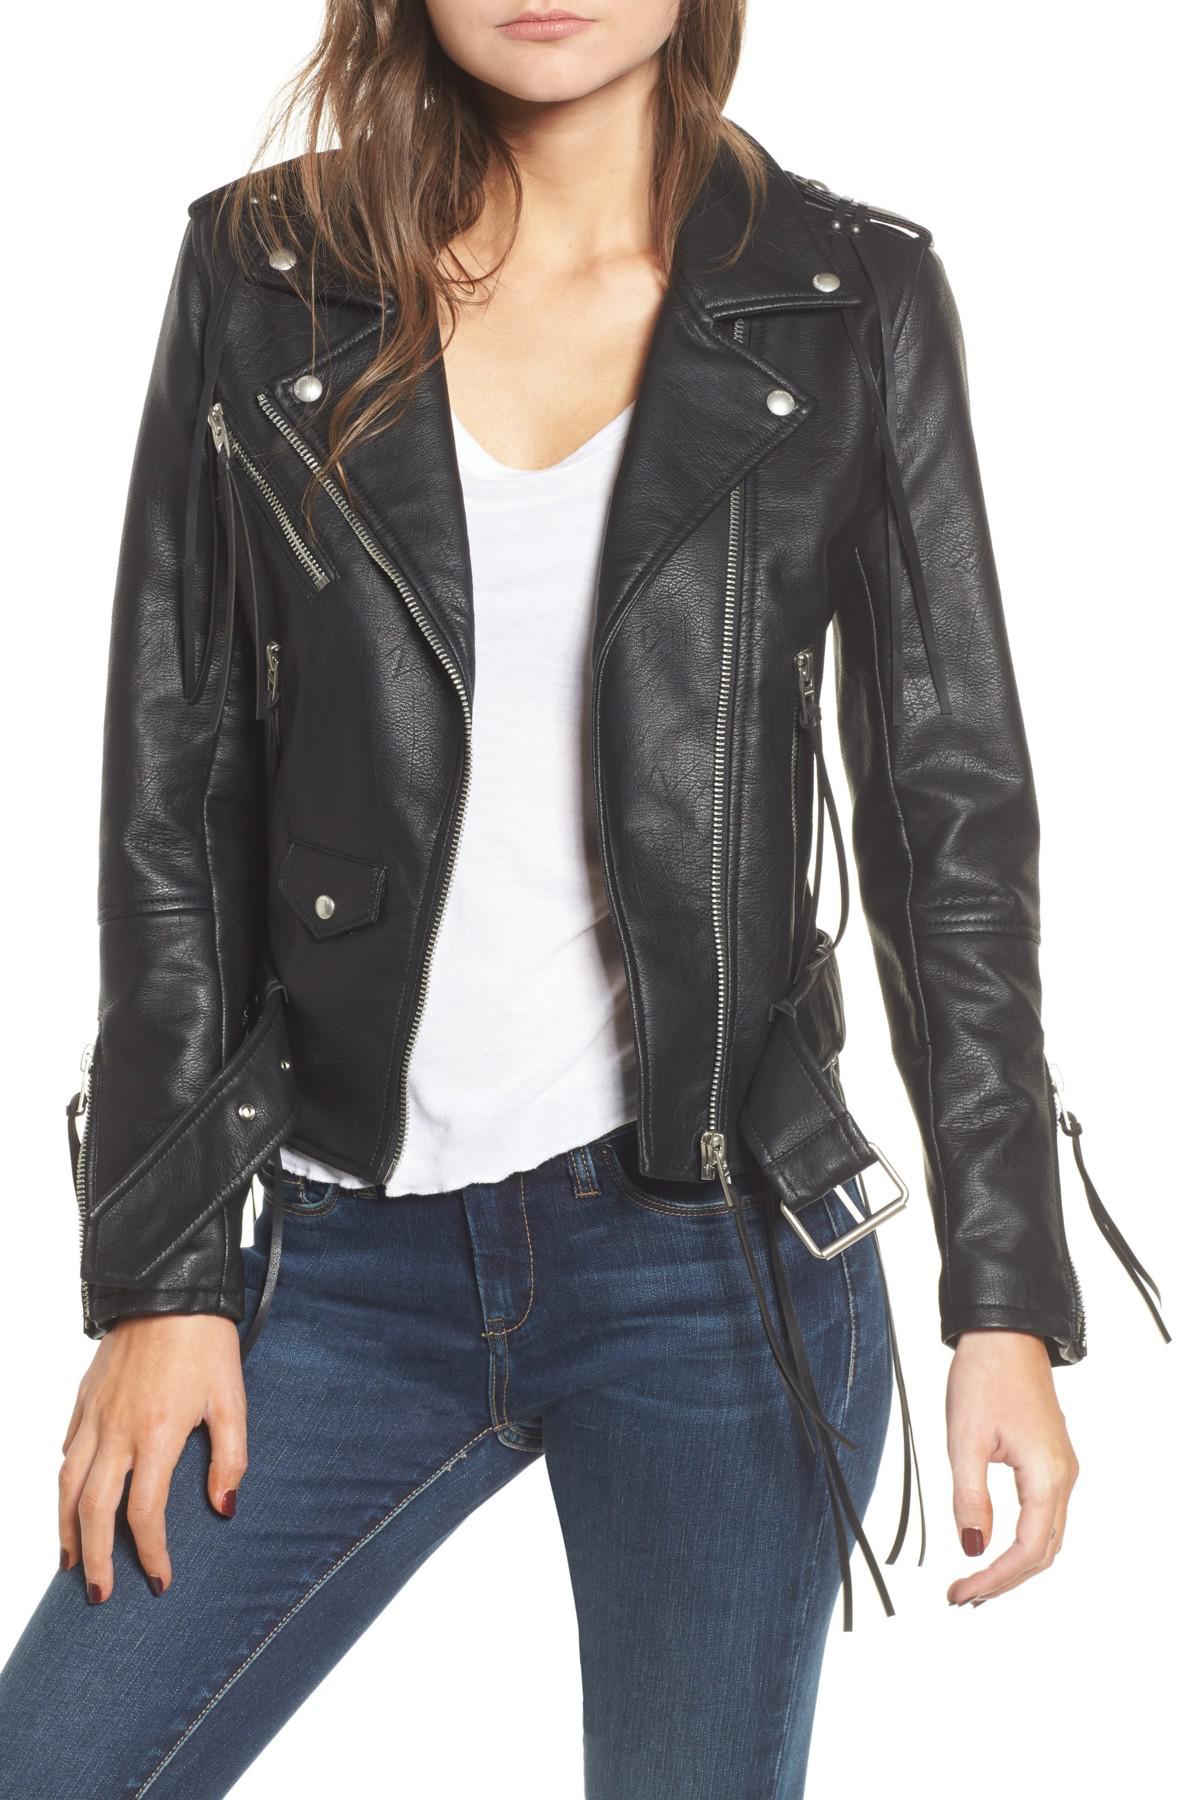 Lyst - Blank Nyc Faux Leather Tassel Moto Jacket in Black - Save 58%